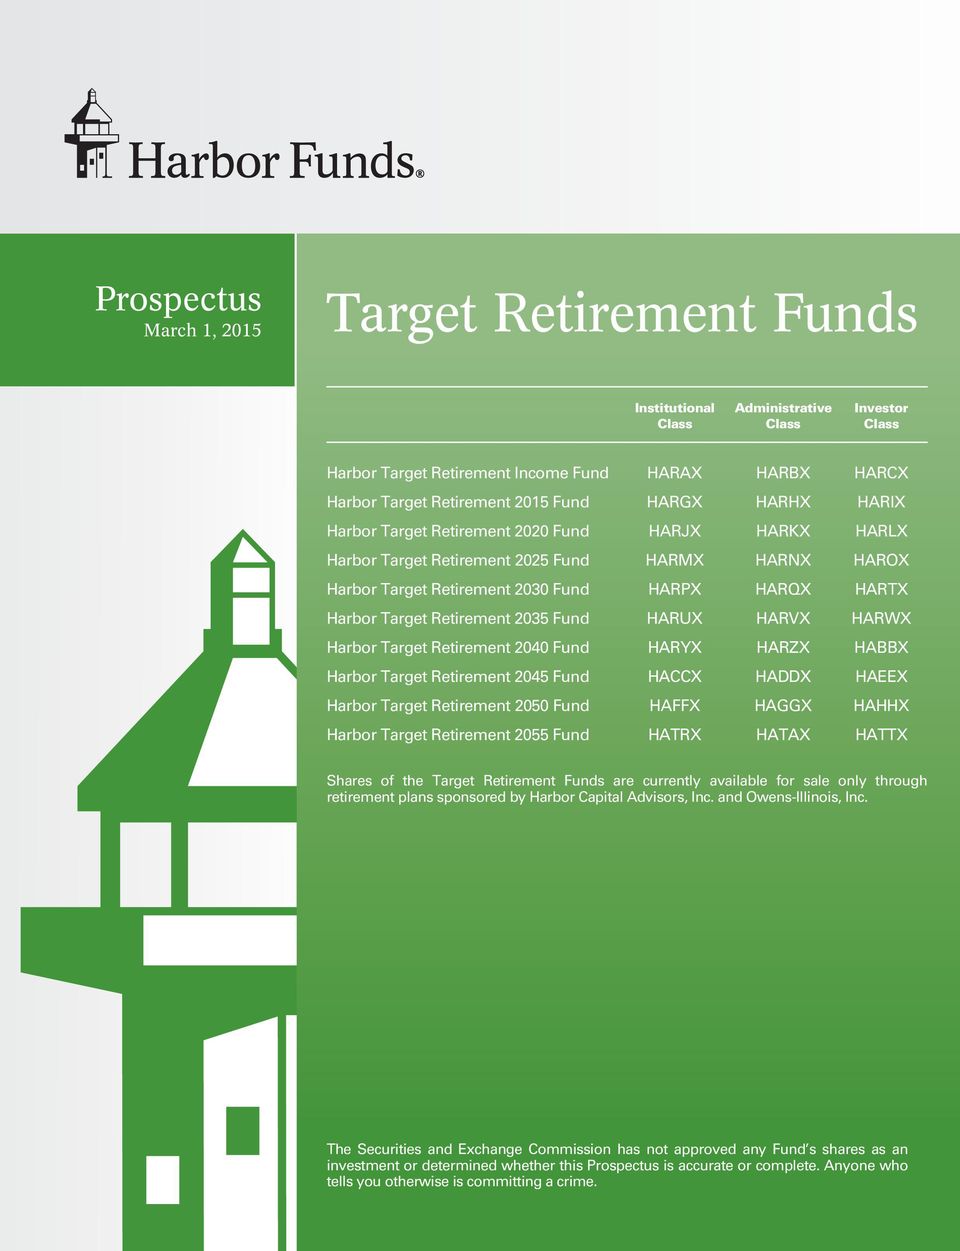 Retirement 2035 Fund HARUX HARVX HARWX Harbor Target Retirement 2040 Fund HARYX HARZX HABBX Harbor Target Retirement 2045 Fund HACCX HADDX HAEEX Harbor Target Retirement 2050 Fund HAFFX HAGGX HAHHX